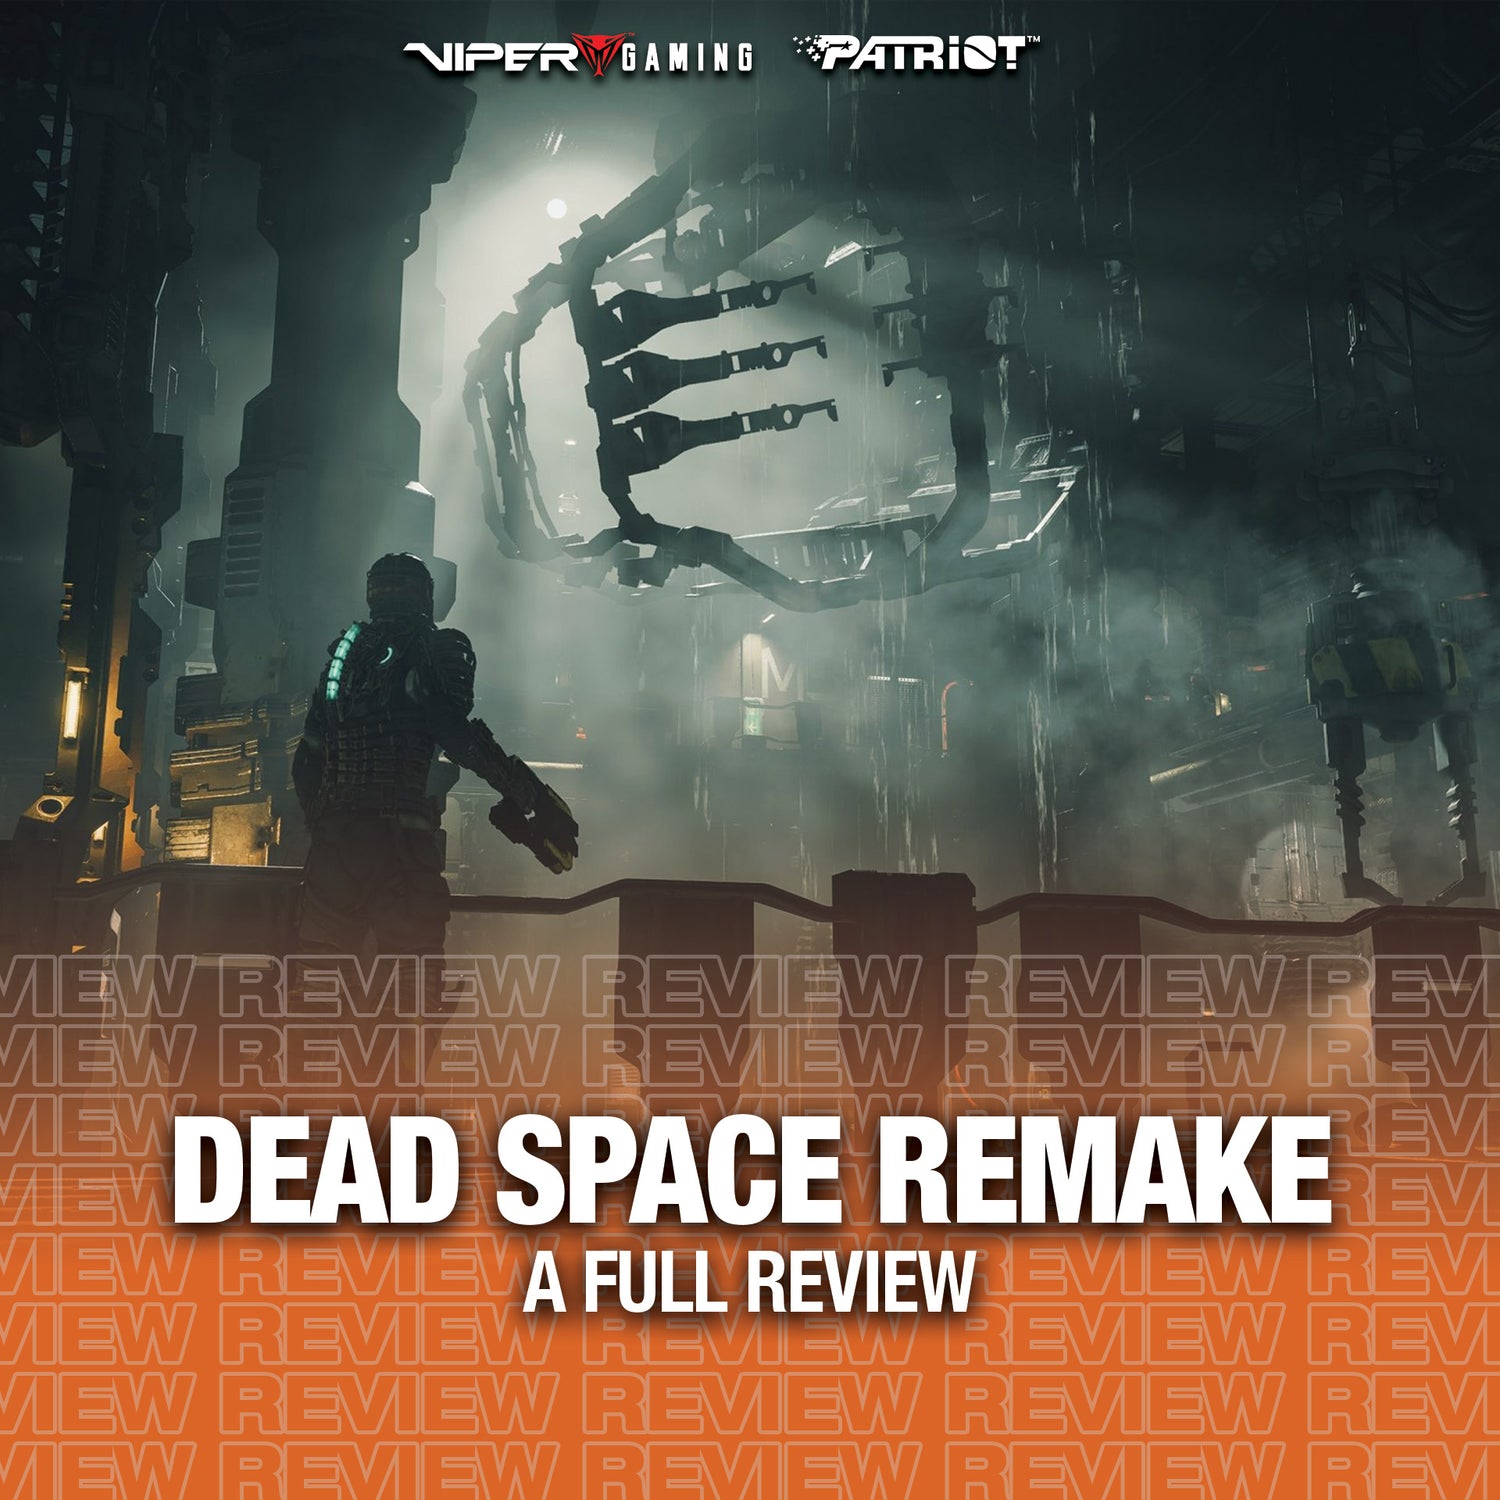 Dead Space remake review: A next-gen horror classic